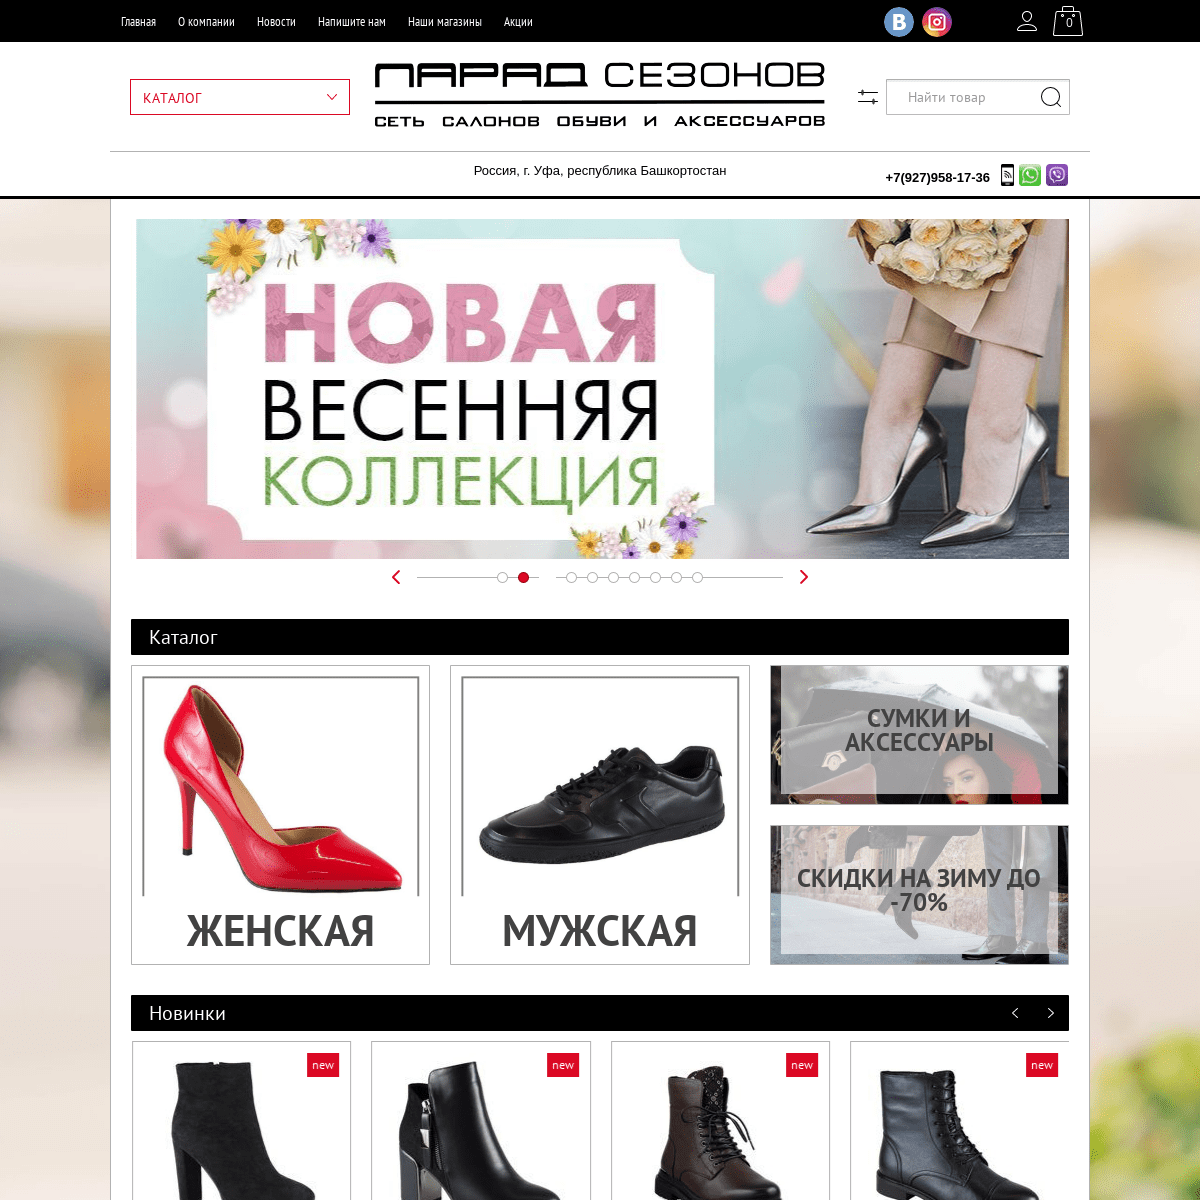 A complete backup of paradsezon.ru